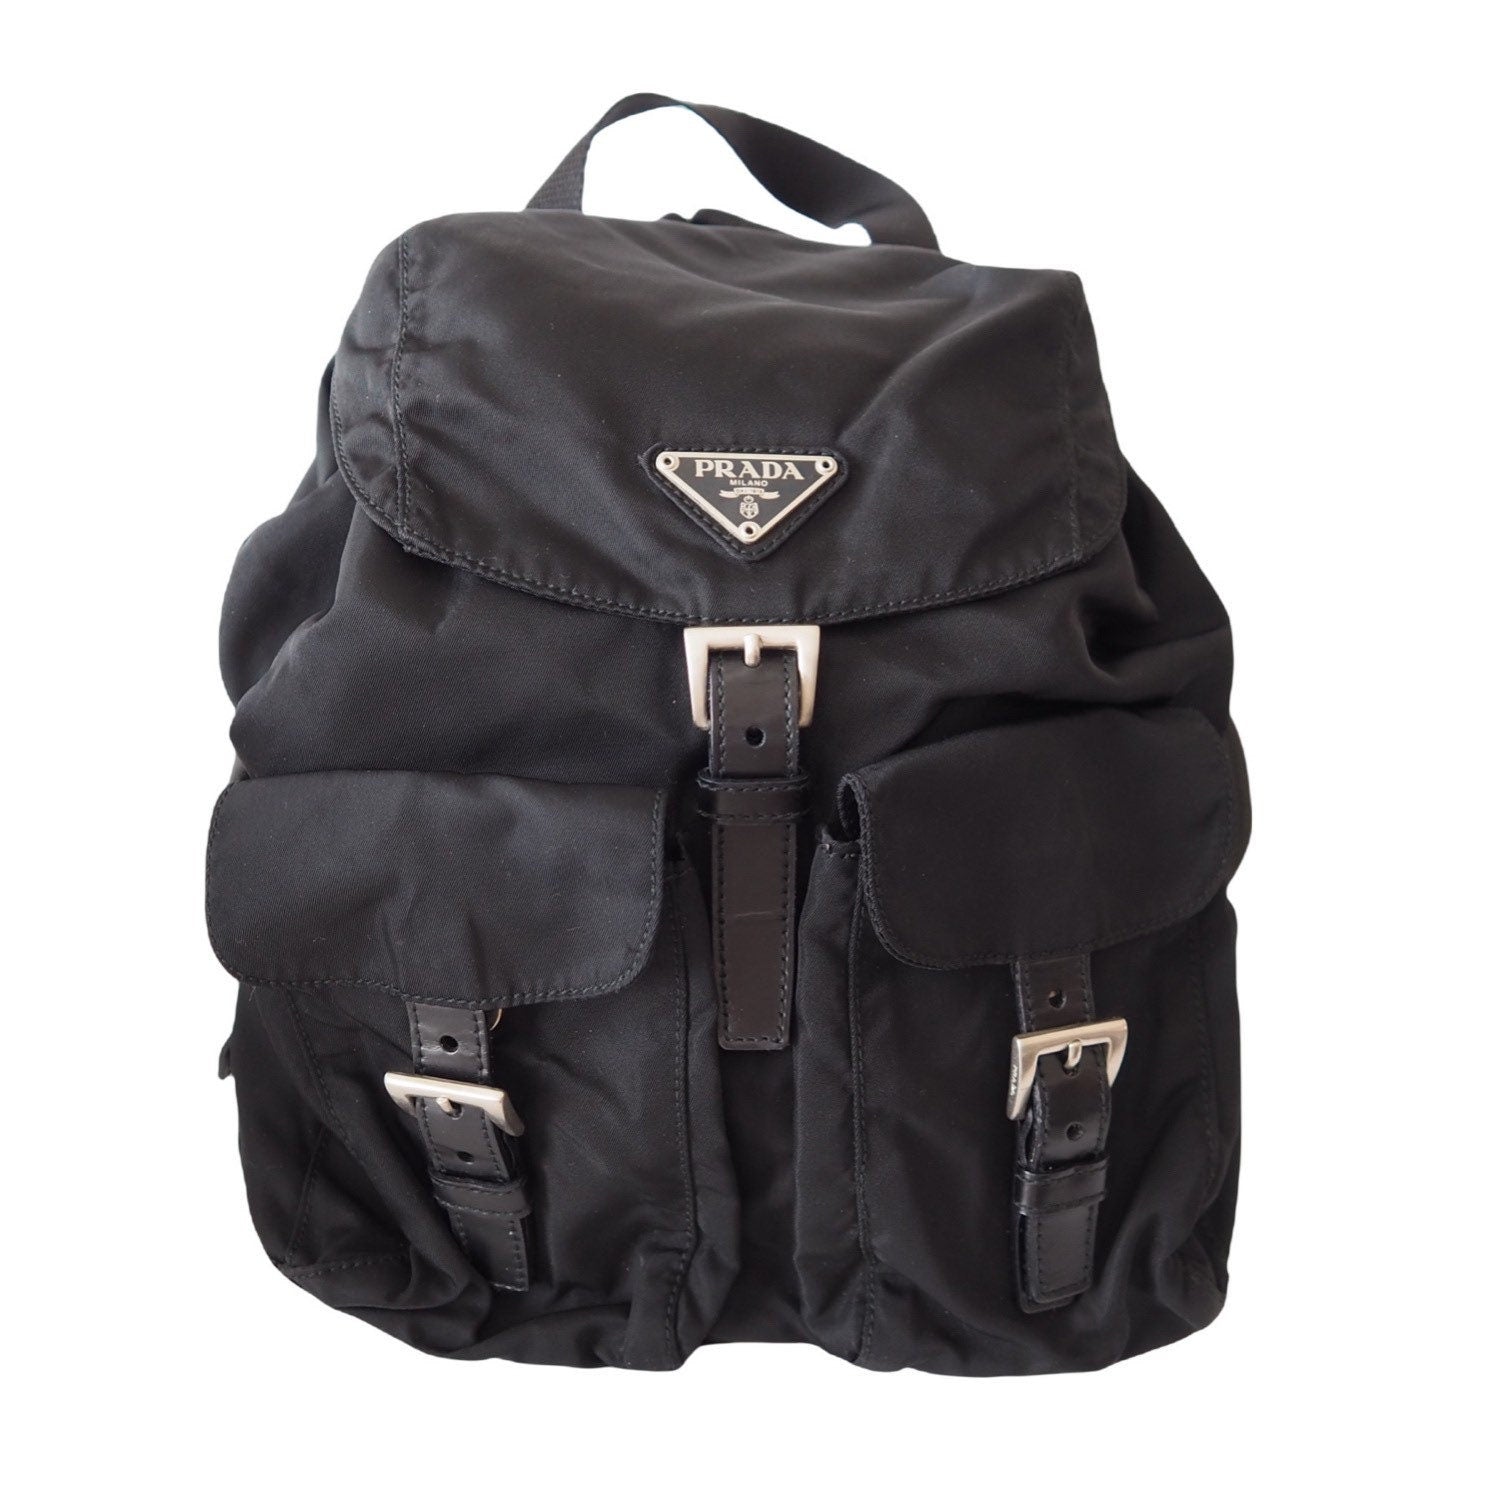 PRADA Nylon Backpack Bag Black Logo Purse Authentic